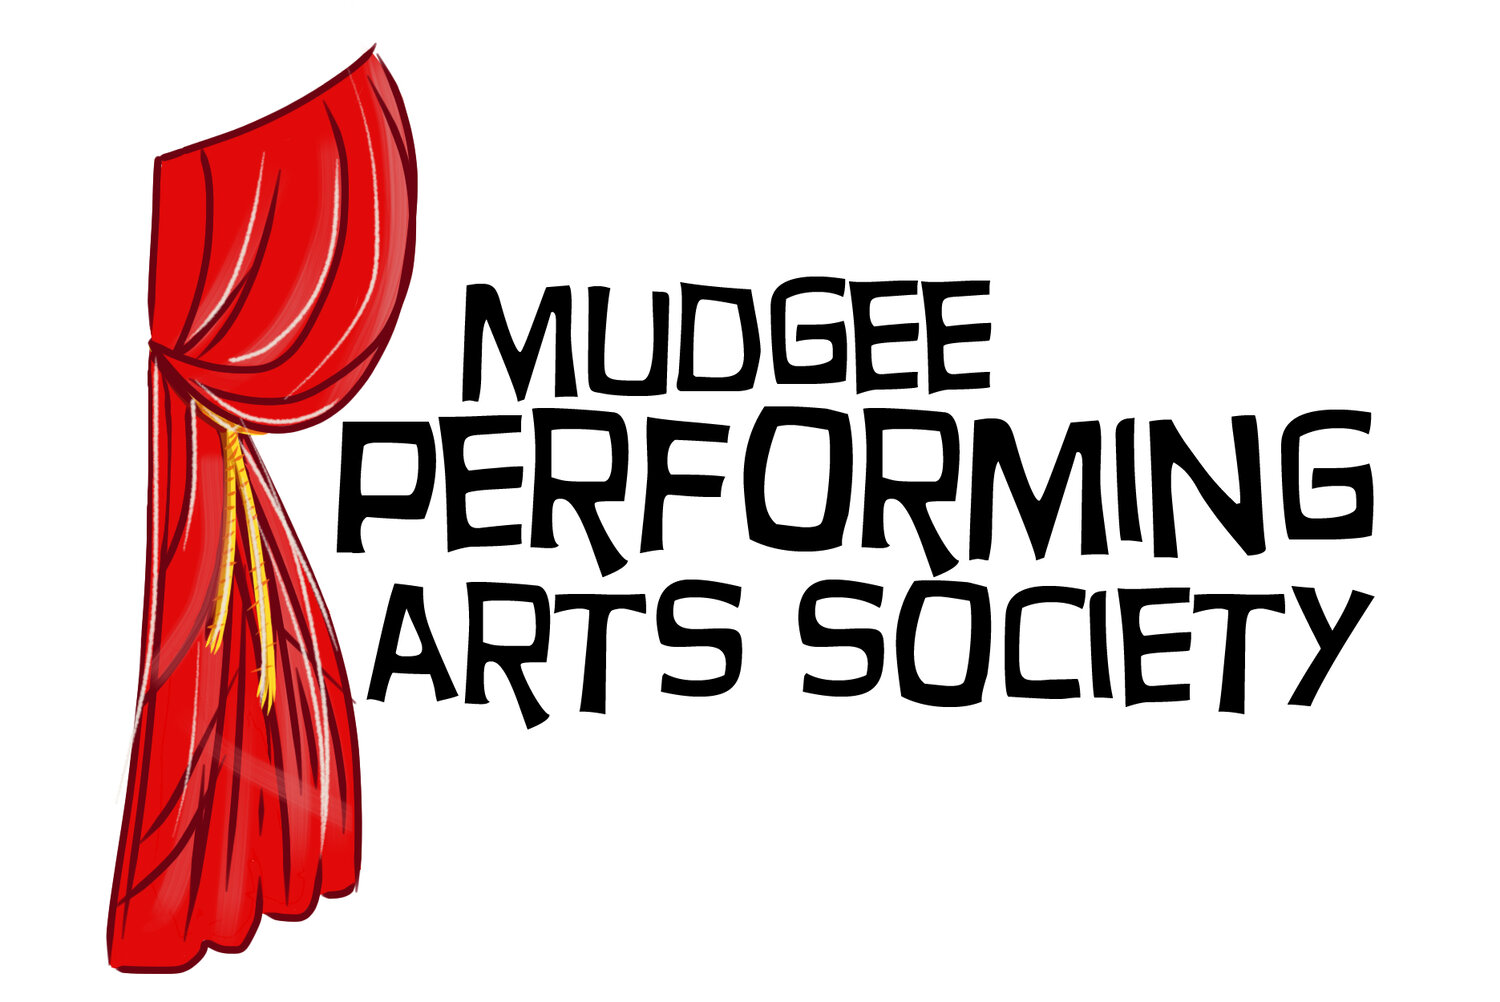 Mudgee Performing Arts Society